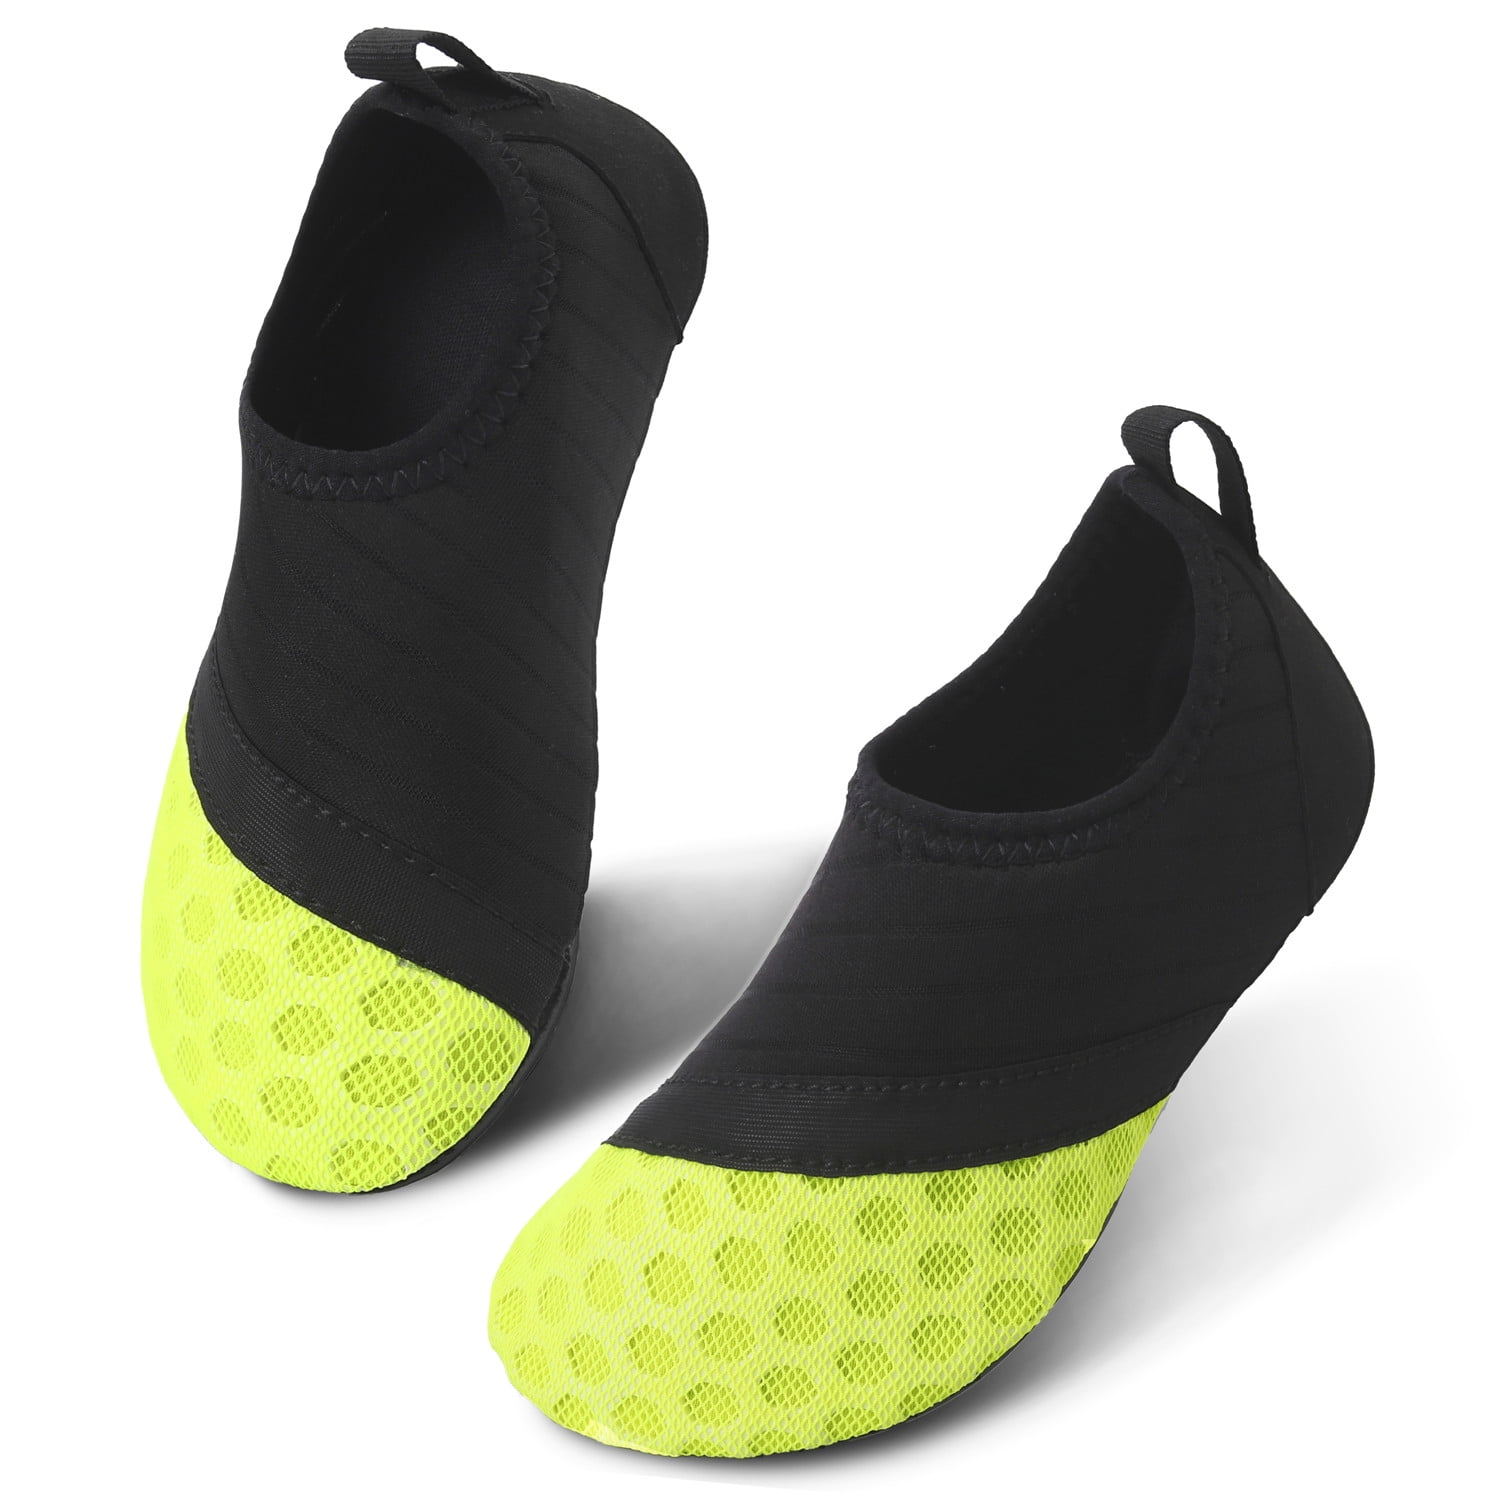 L-RUN Kids Unisex Swim Water Shoes Quick-Dry Aqua Socks Shoes for Pool Surfing Yoga Beach 